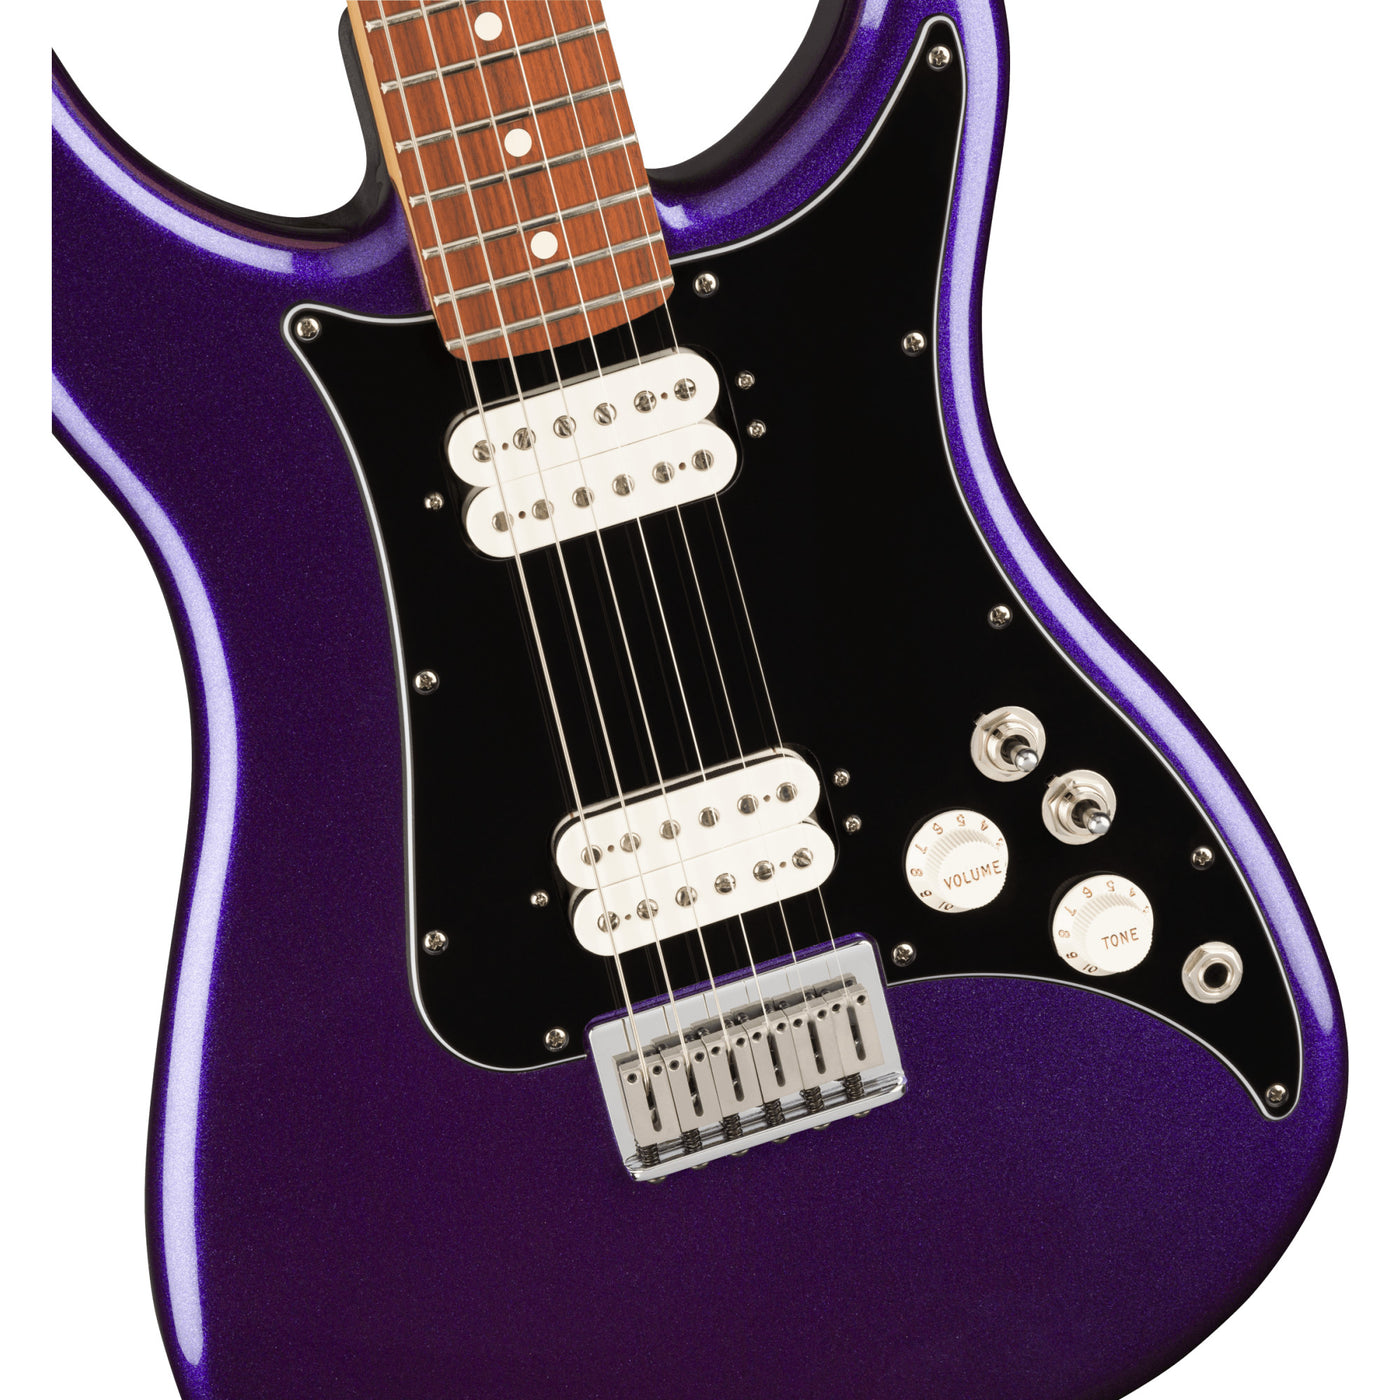 Fender Player Lead lll Electric Guitar, Purple Metallic (0144313577)